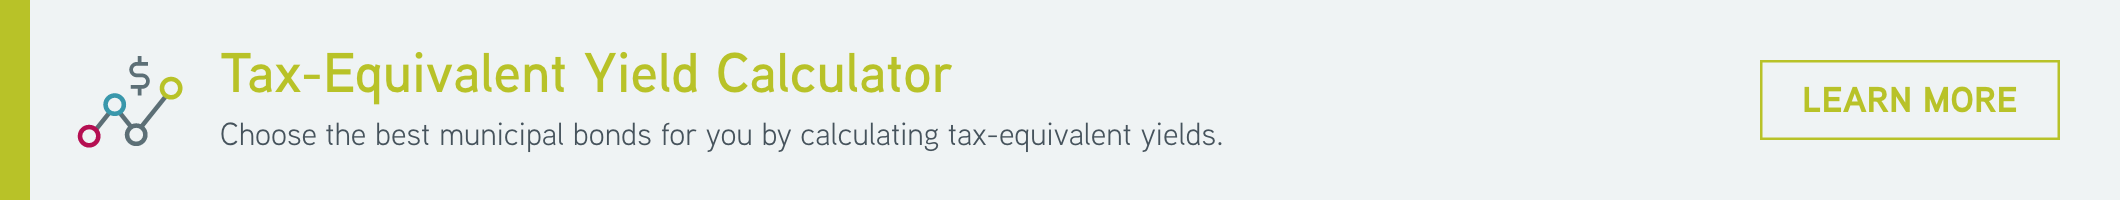 Tax equivalent yield calculator desktop